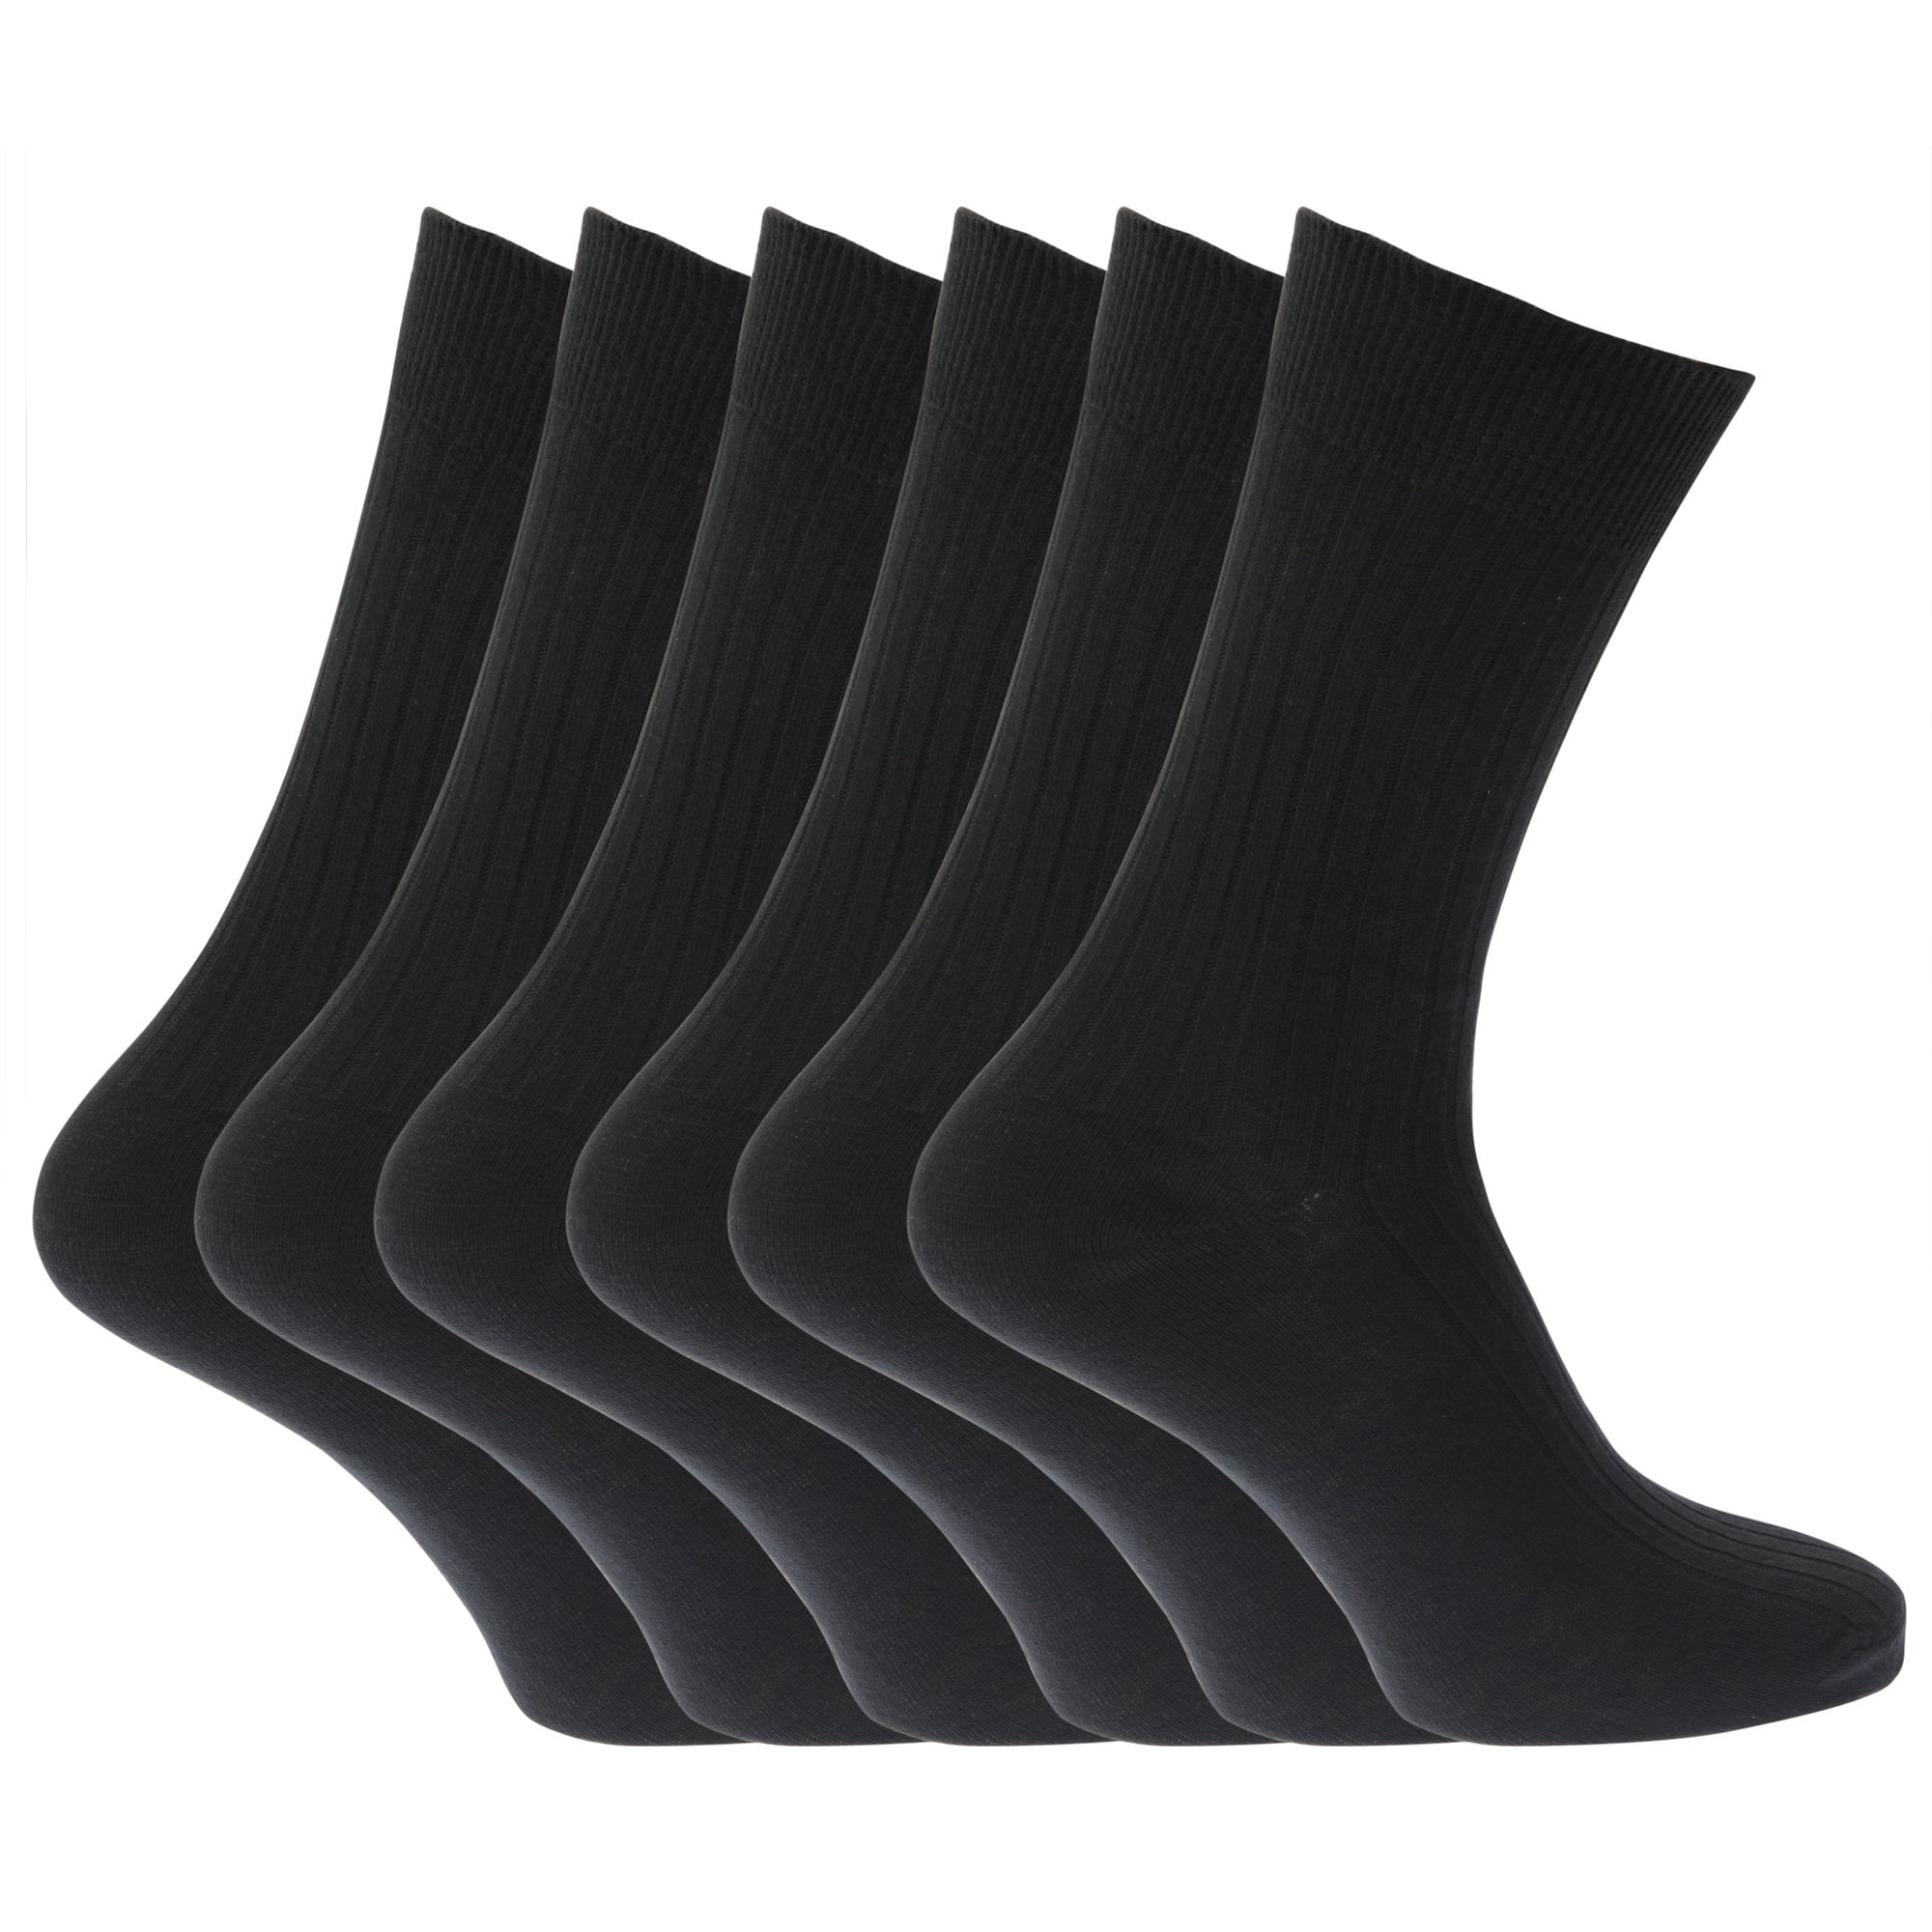 3-24 pairs black 100% pure cotton mens socks size 6-11 FRESH FEEL 